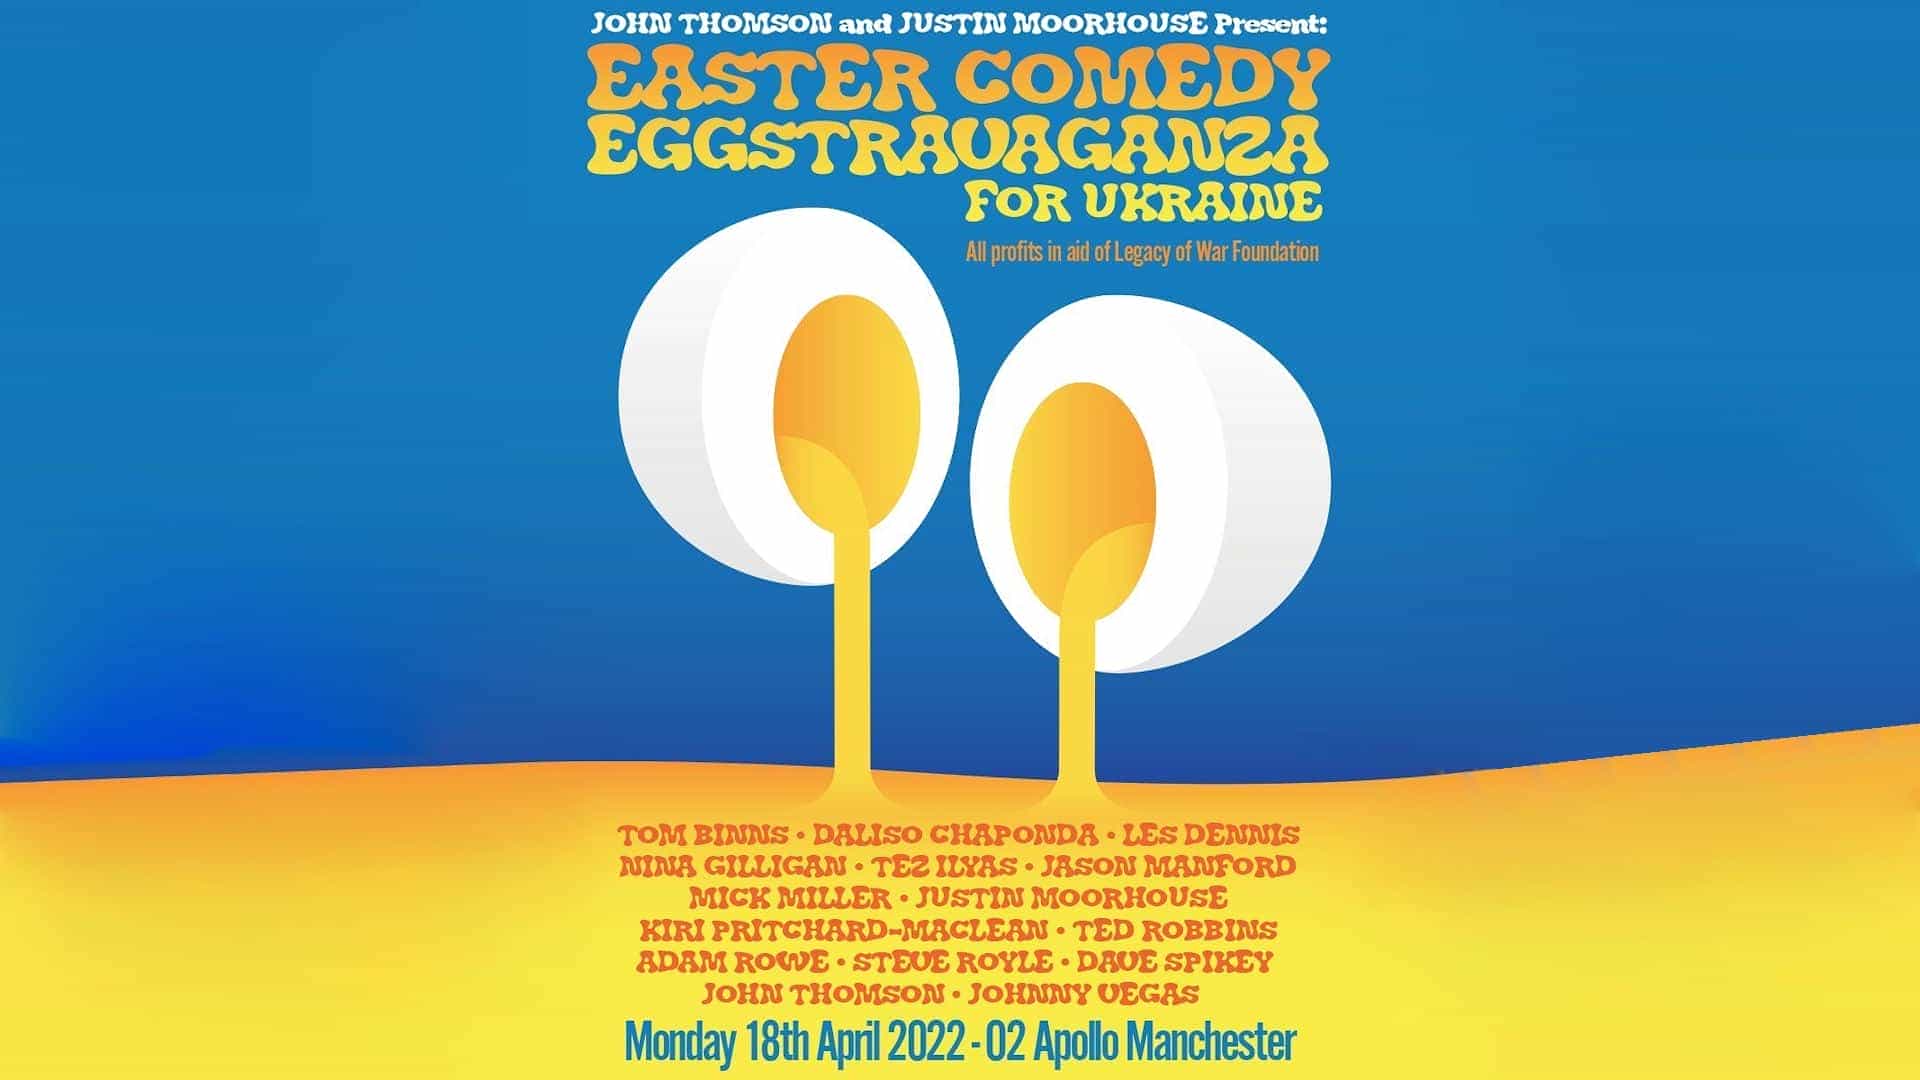 Easter Comedy Eggstravaganaza for Ukraine